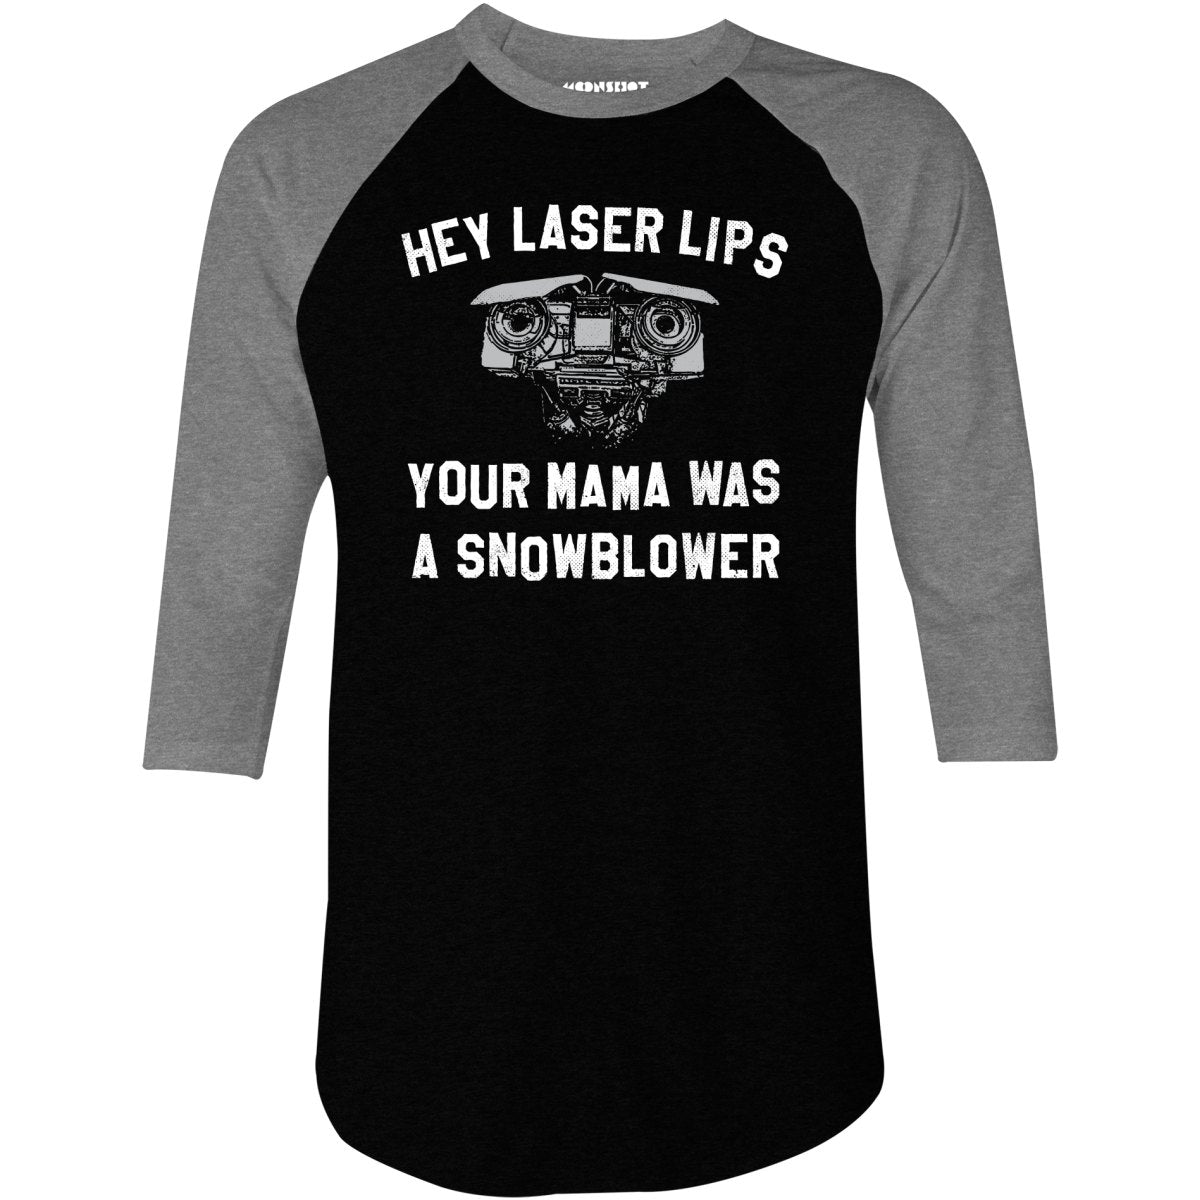 Hey Laser Lips - 3/4 Sleeve Raglan T-Shirt